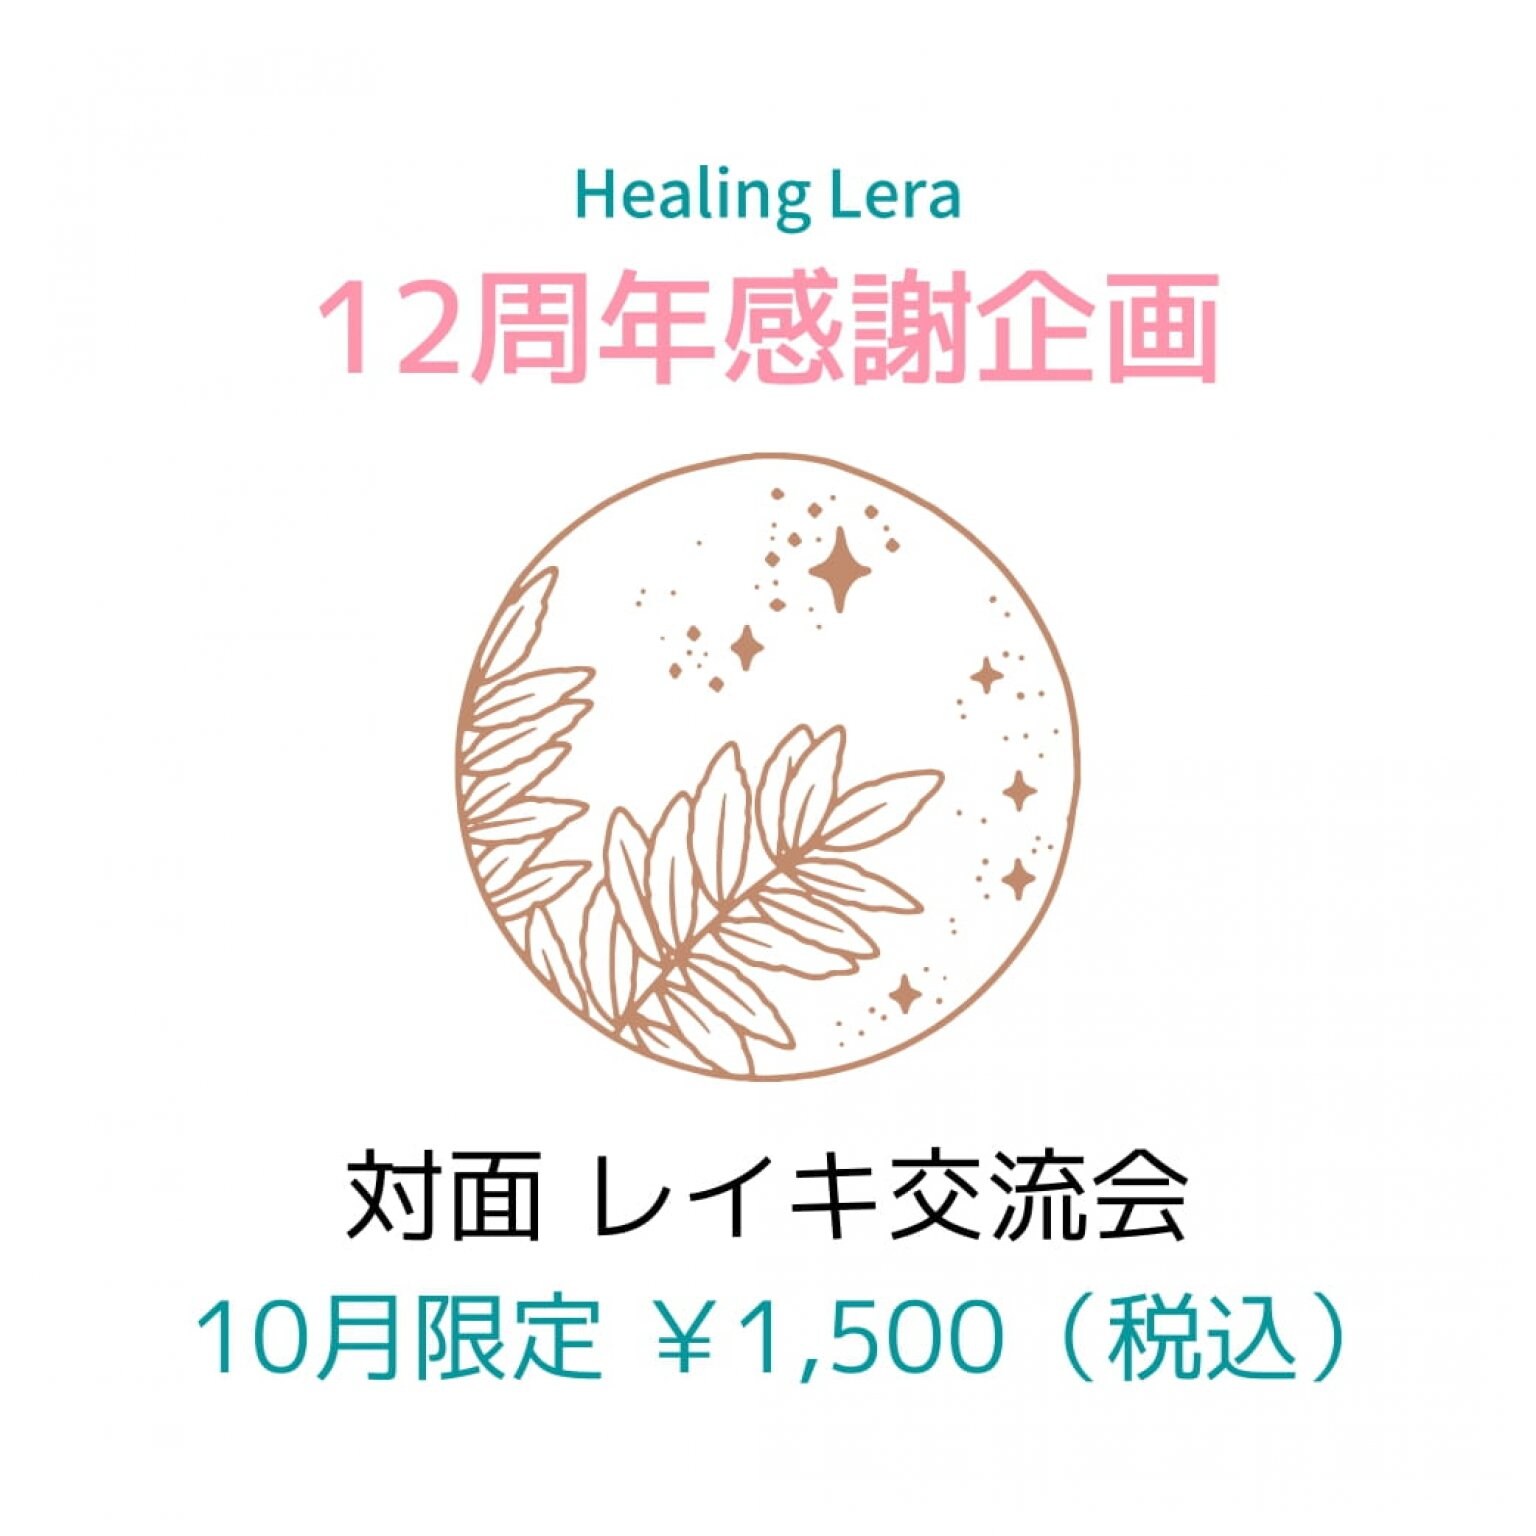 Healing Lera 10月の対面「レイキ交流会」